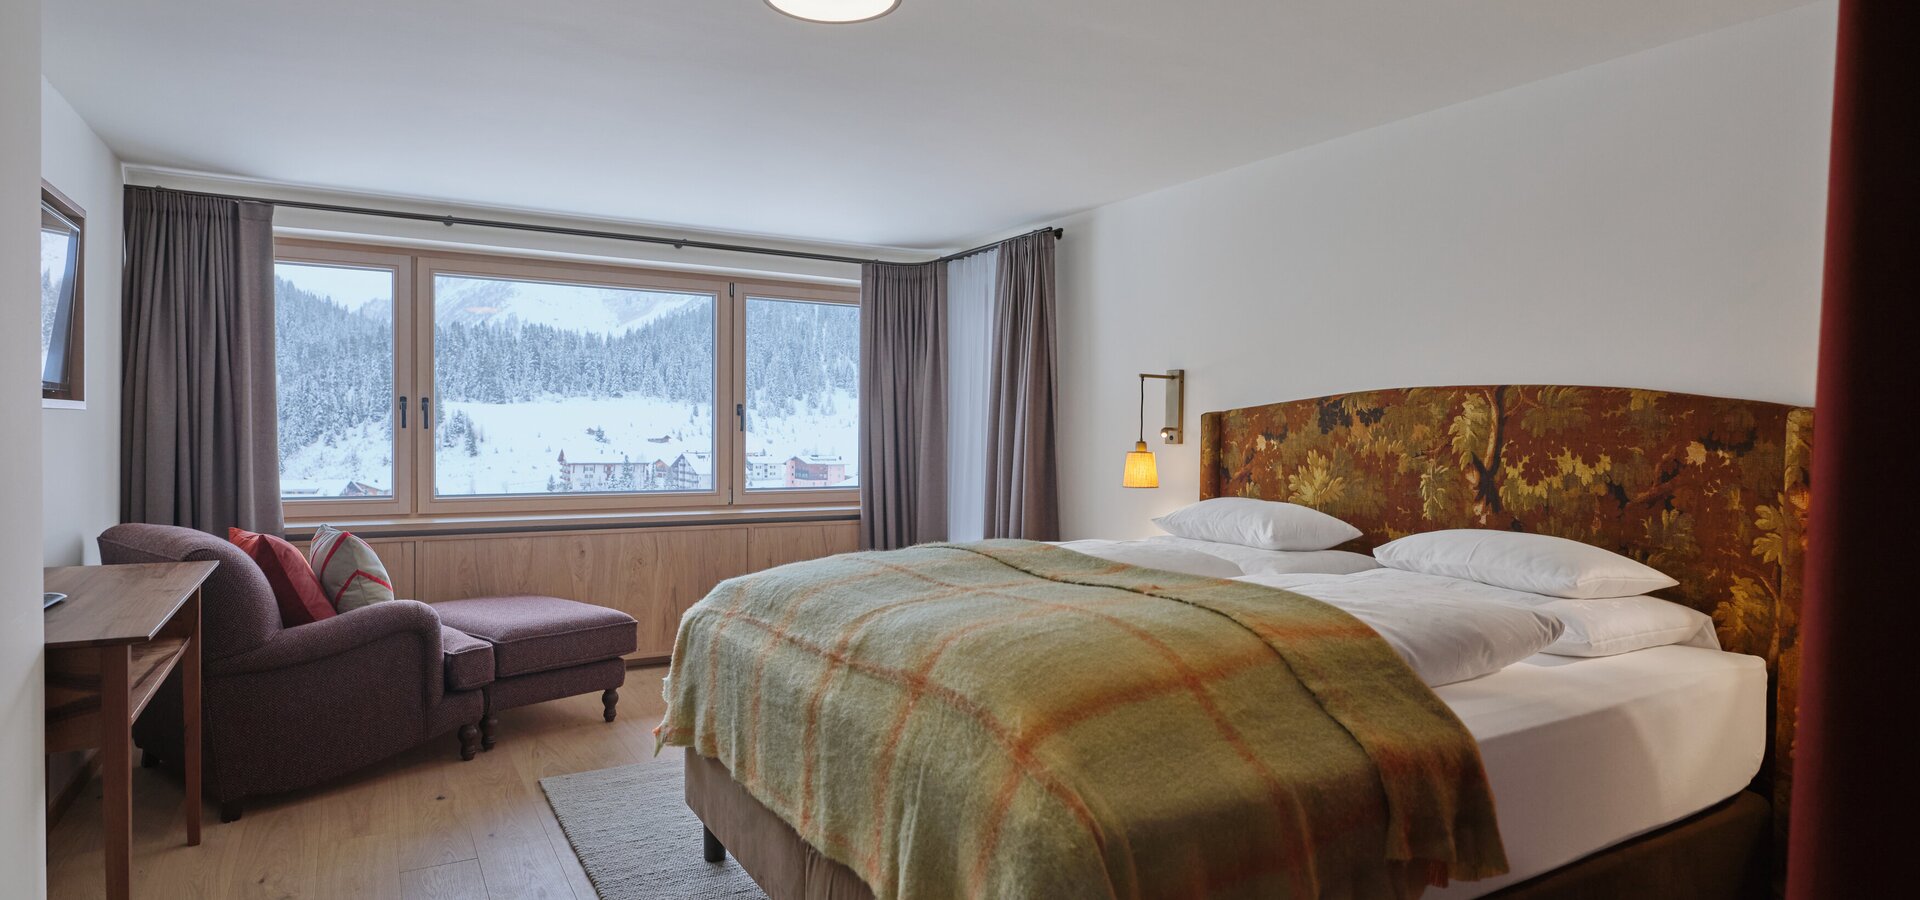 double room in winter in Lech